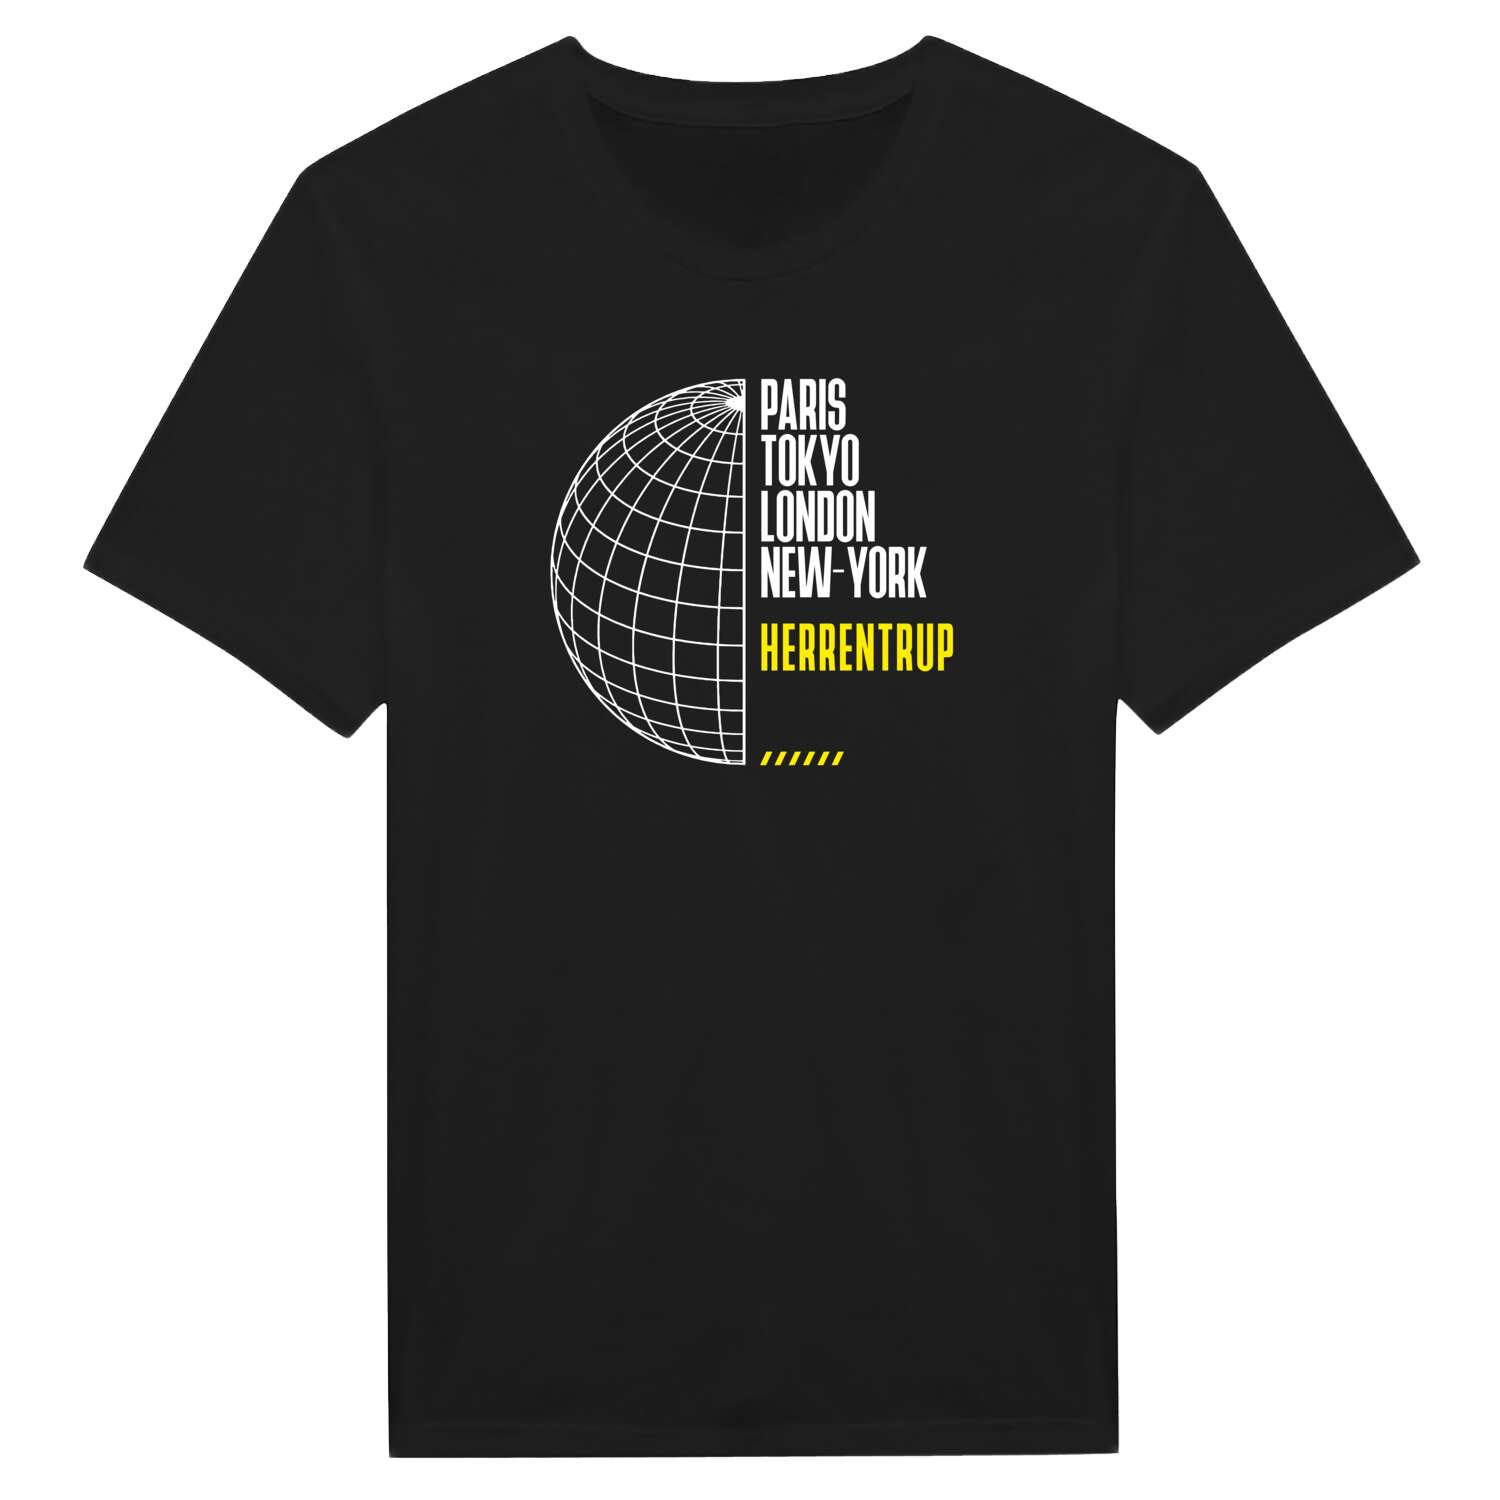 Herrentrup T-Shirt »Paris Tokyo London«